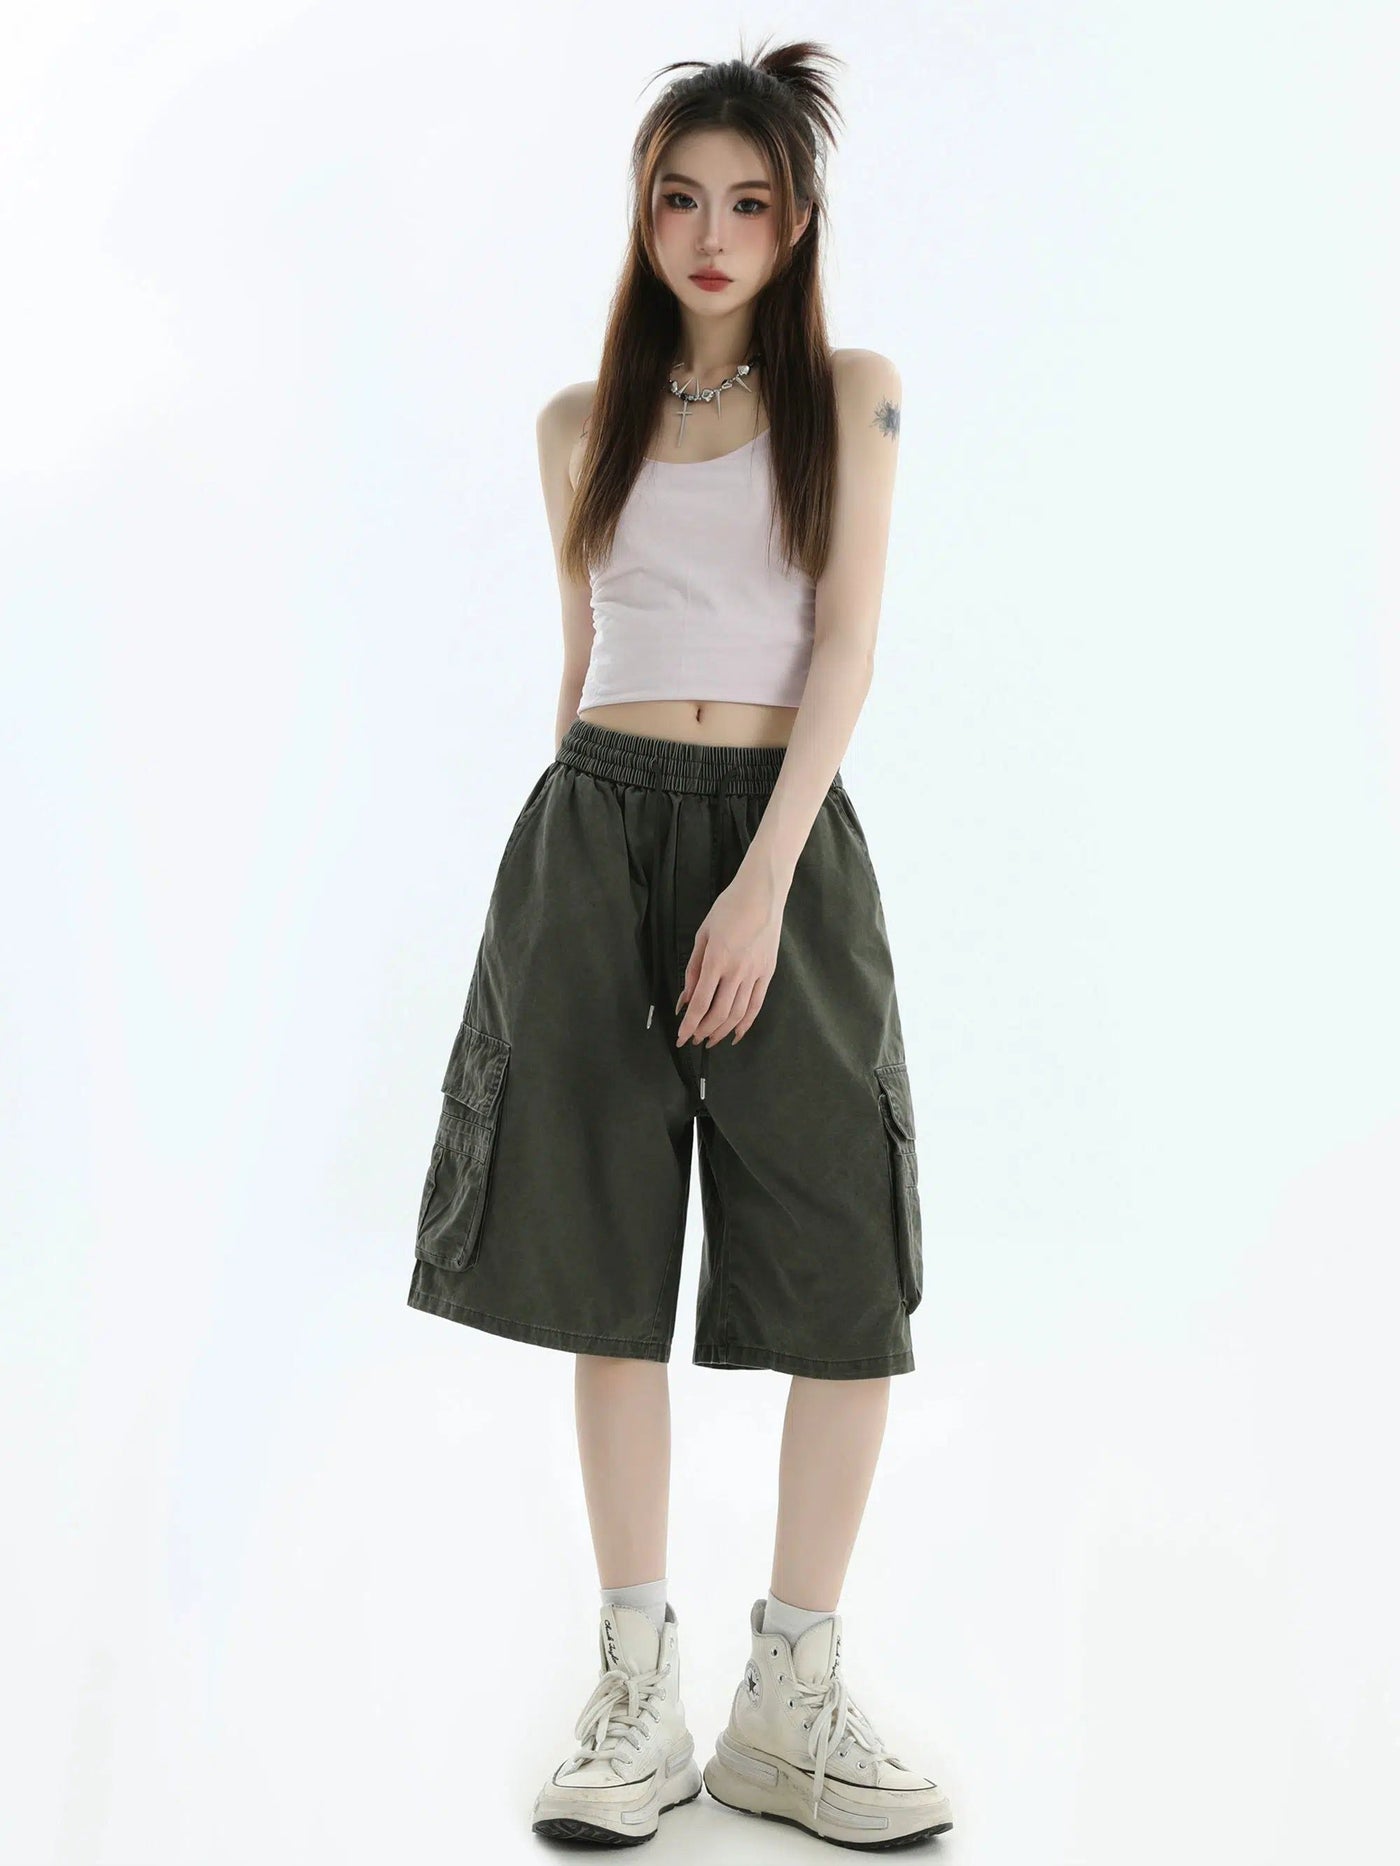 Gartered Cargo Denim Shorts Korean Street Fashion Shorts By INS Korea Shop Online at OH Vault